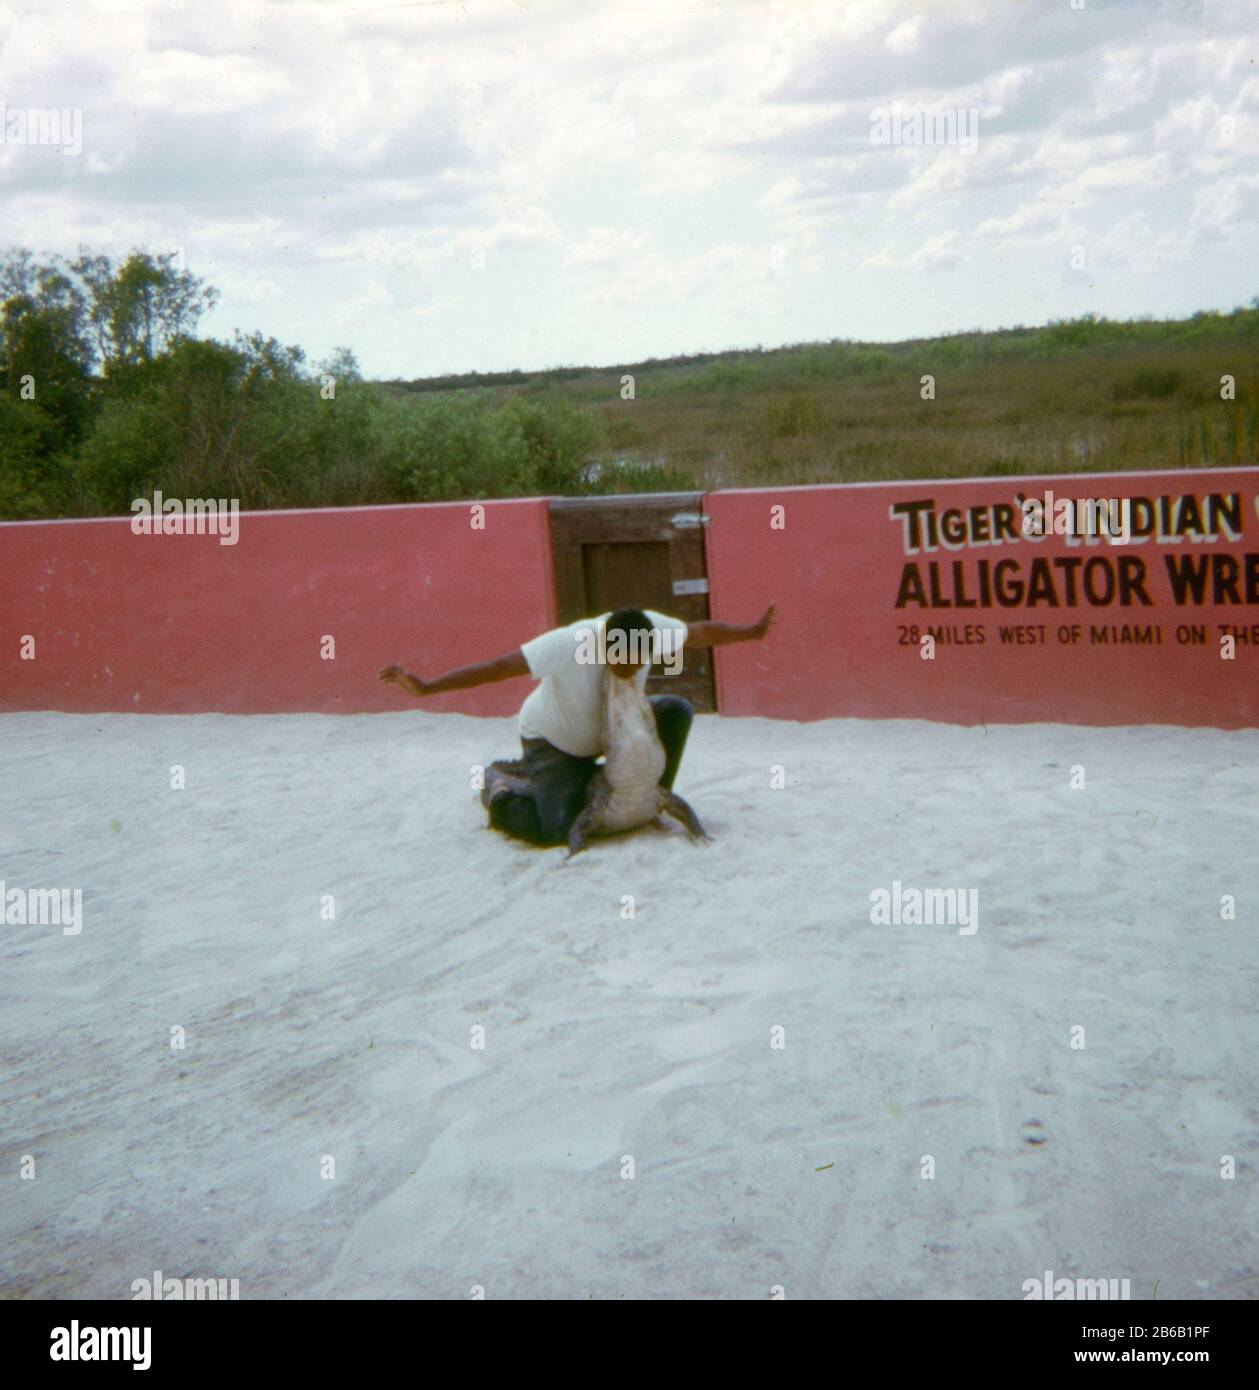 Vintage circa 1972 photograph, Tiger’s Miccosukee Indian Village Alligator Wrestling near Miami, Florida. SOURCE: ORIGINAL 35mm TRANSPARENCY Stock Photo